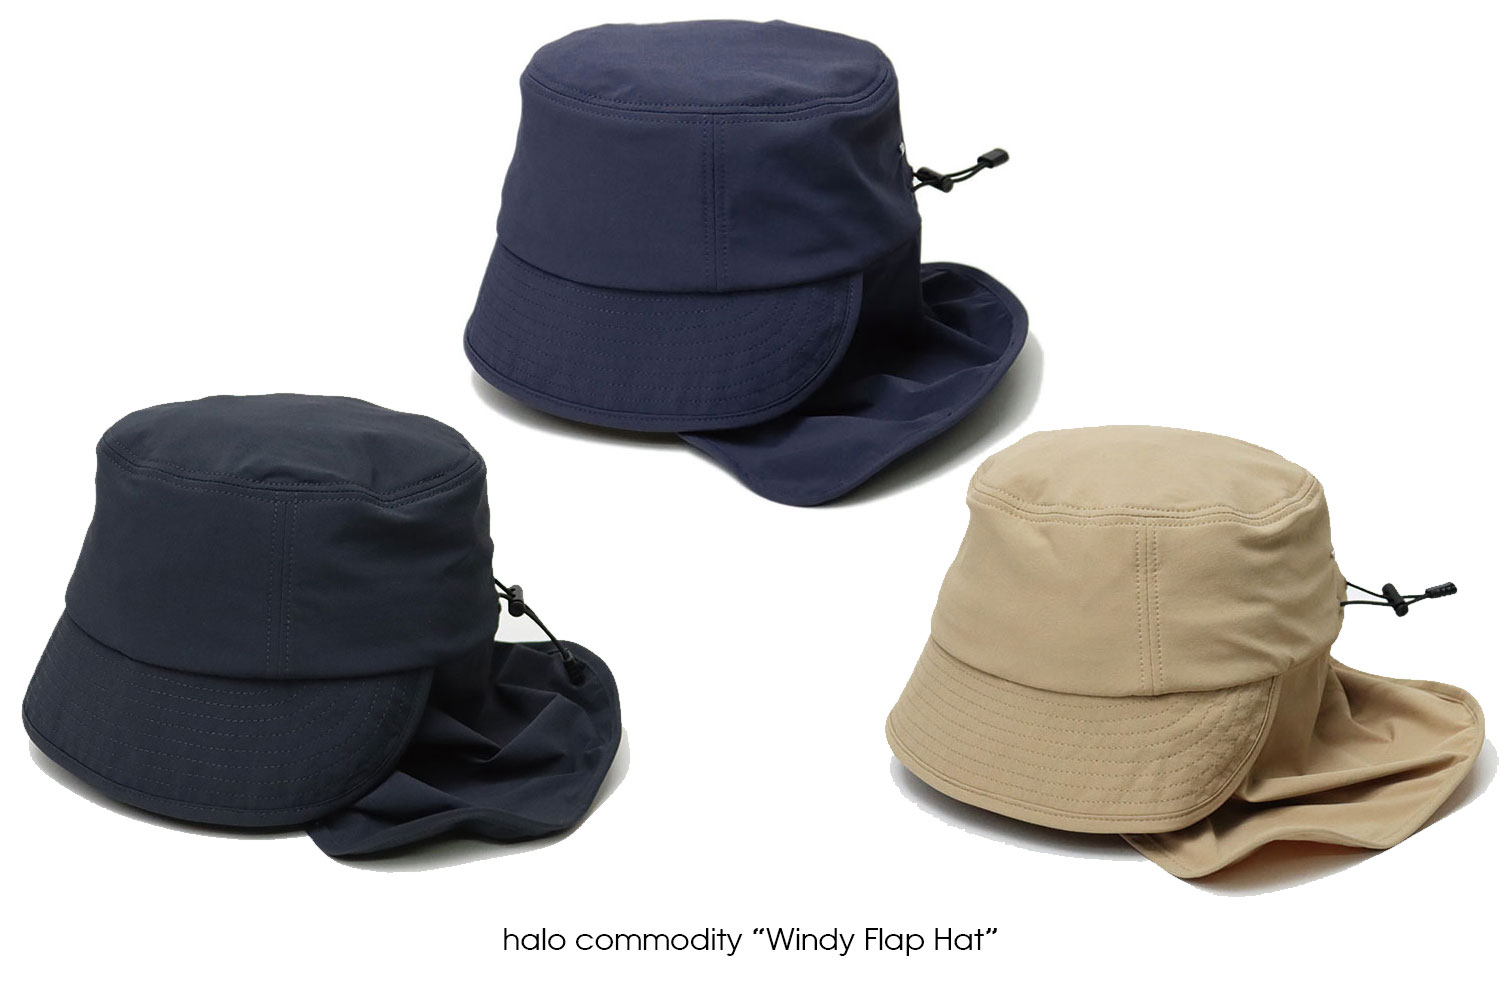 halo commodity "Windy Flap Hat"